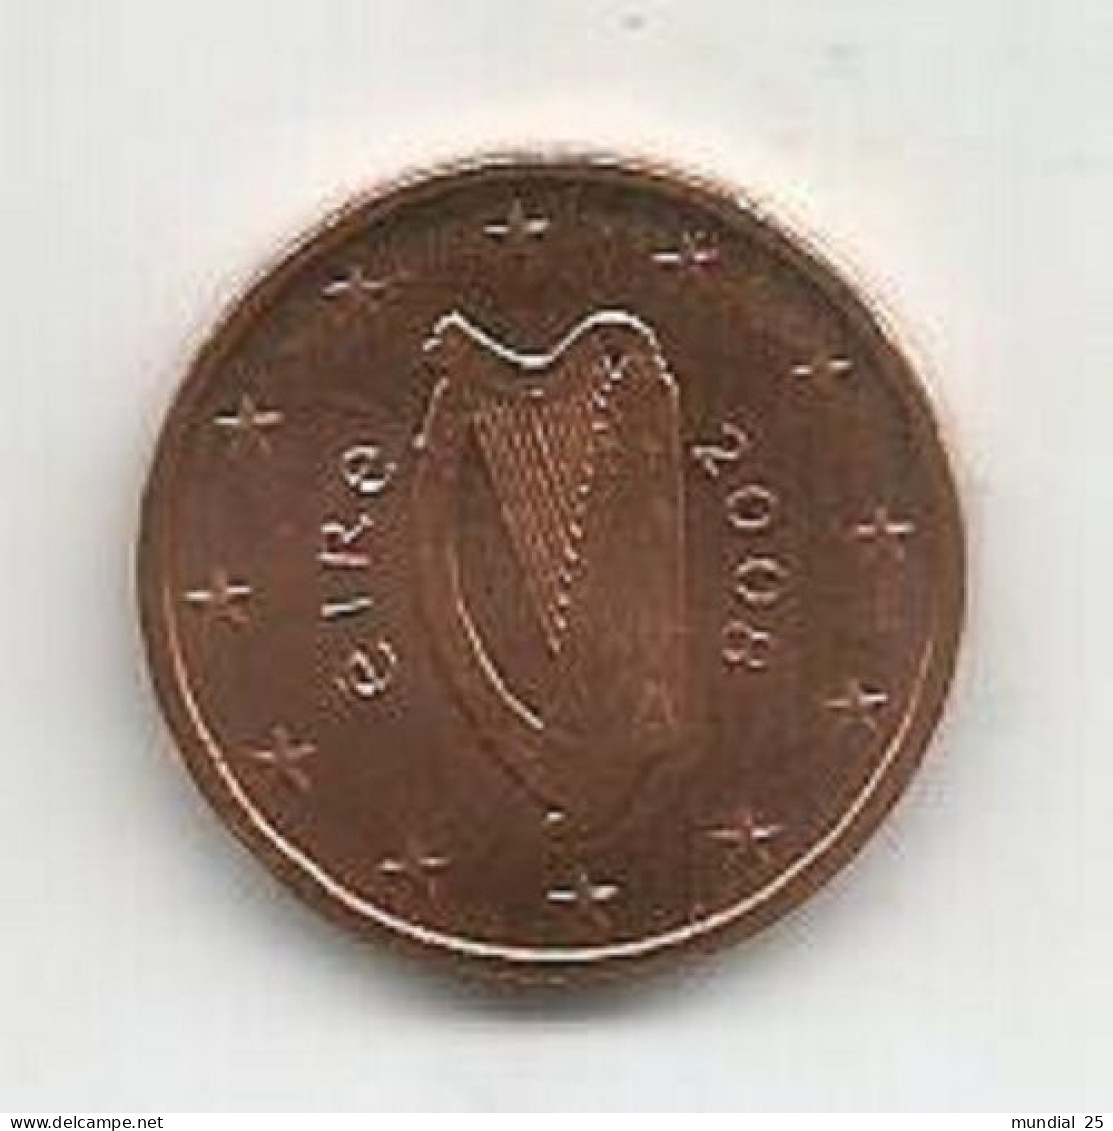 IRELAND 2 EURO CENT 2008 - Irlande